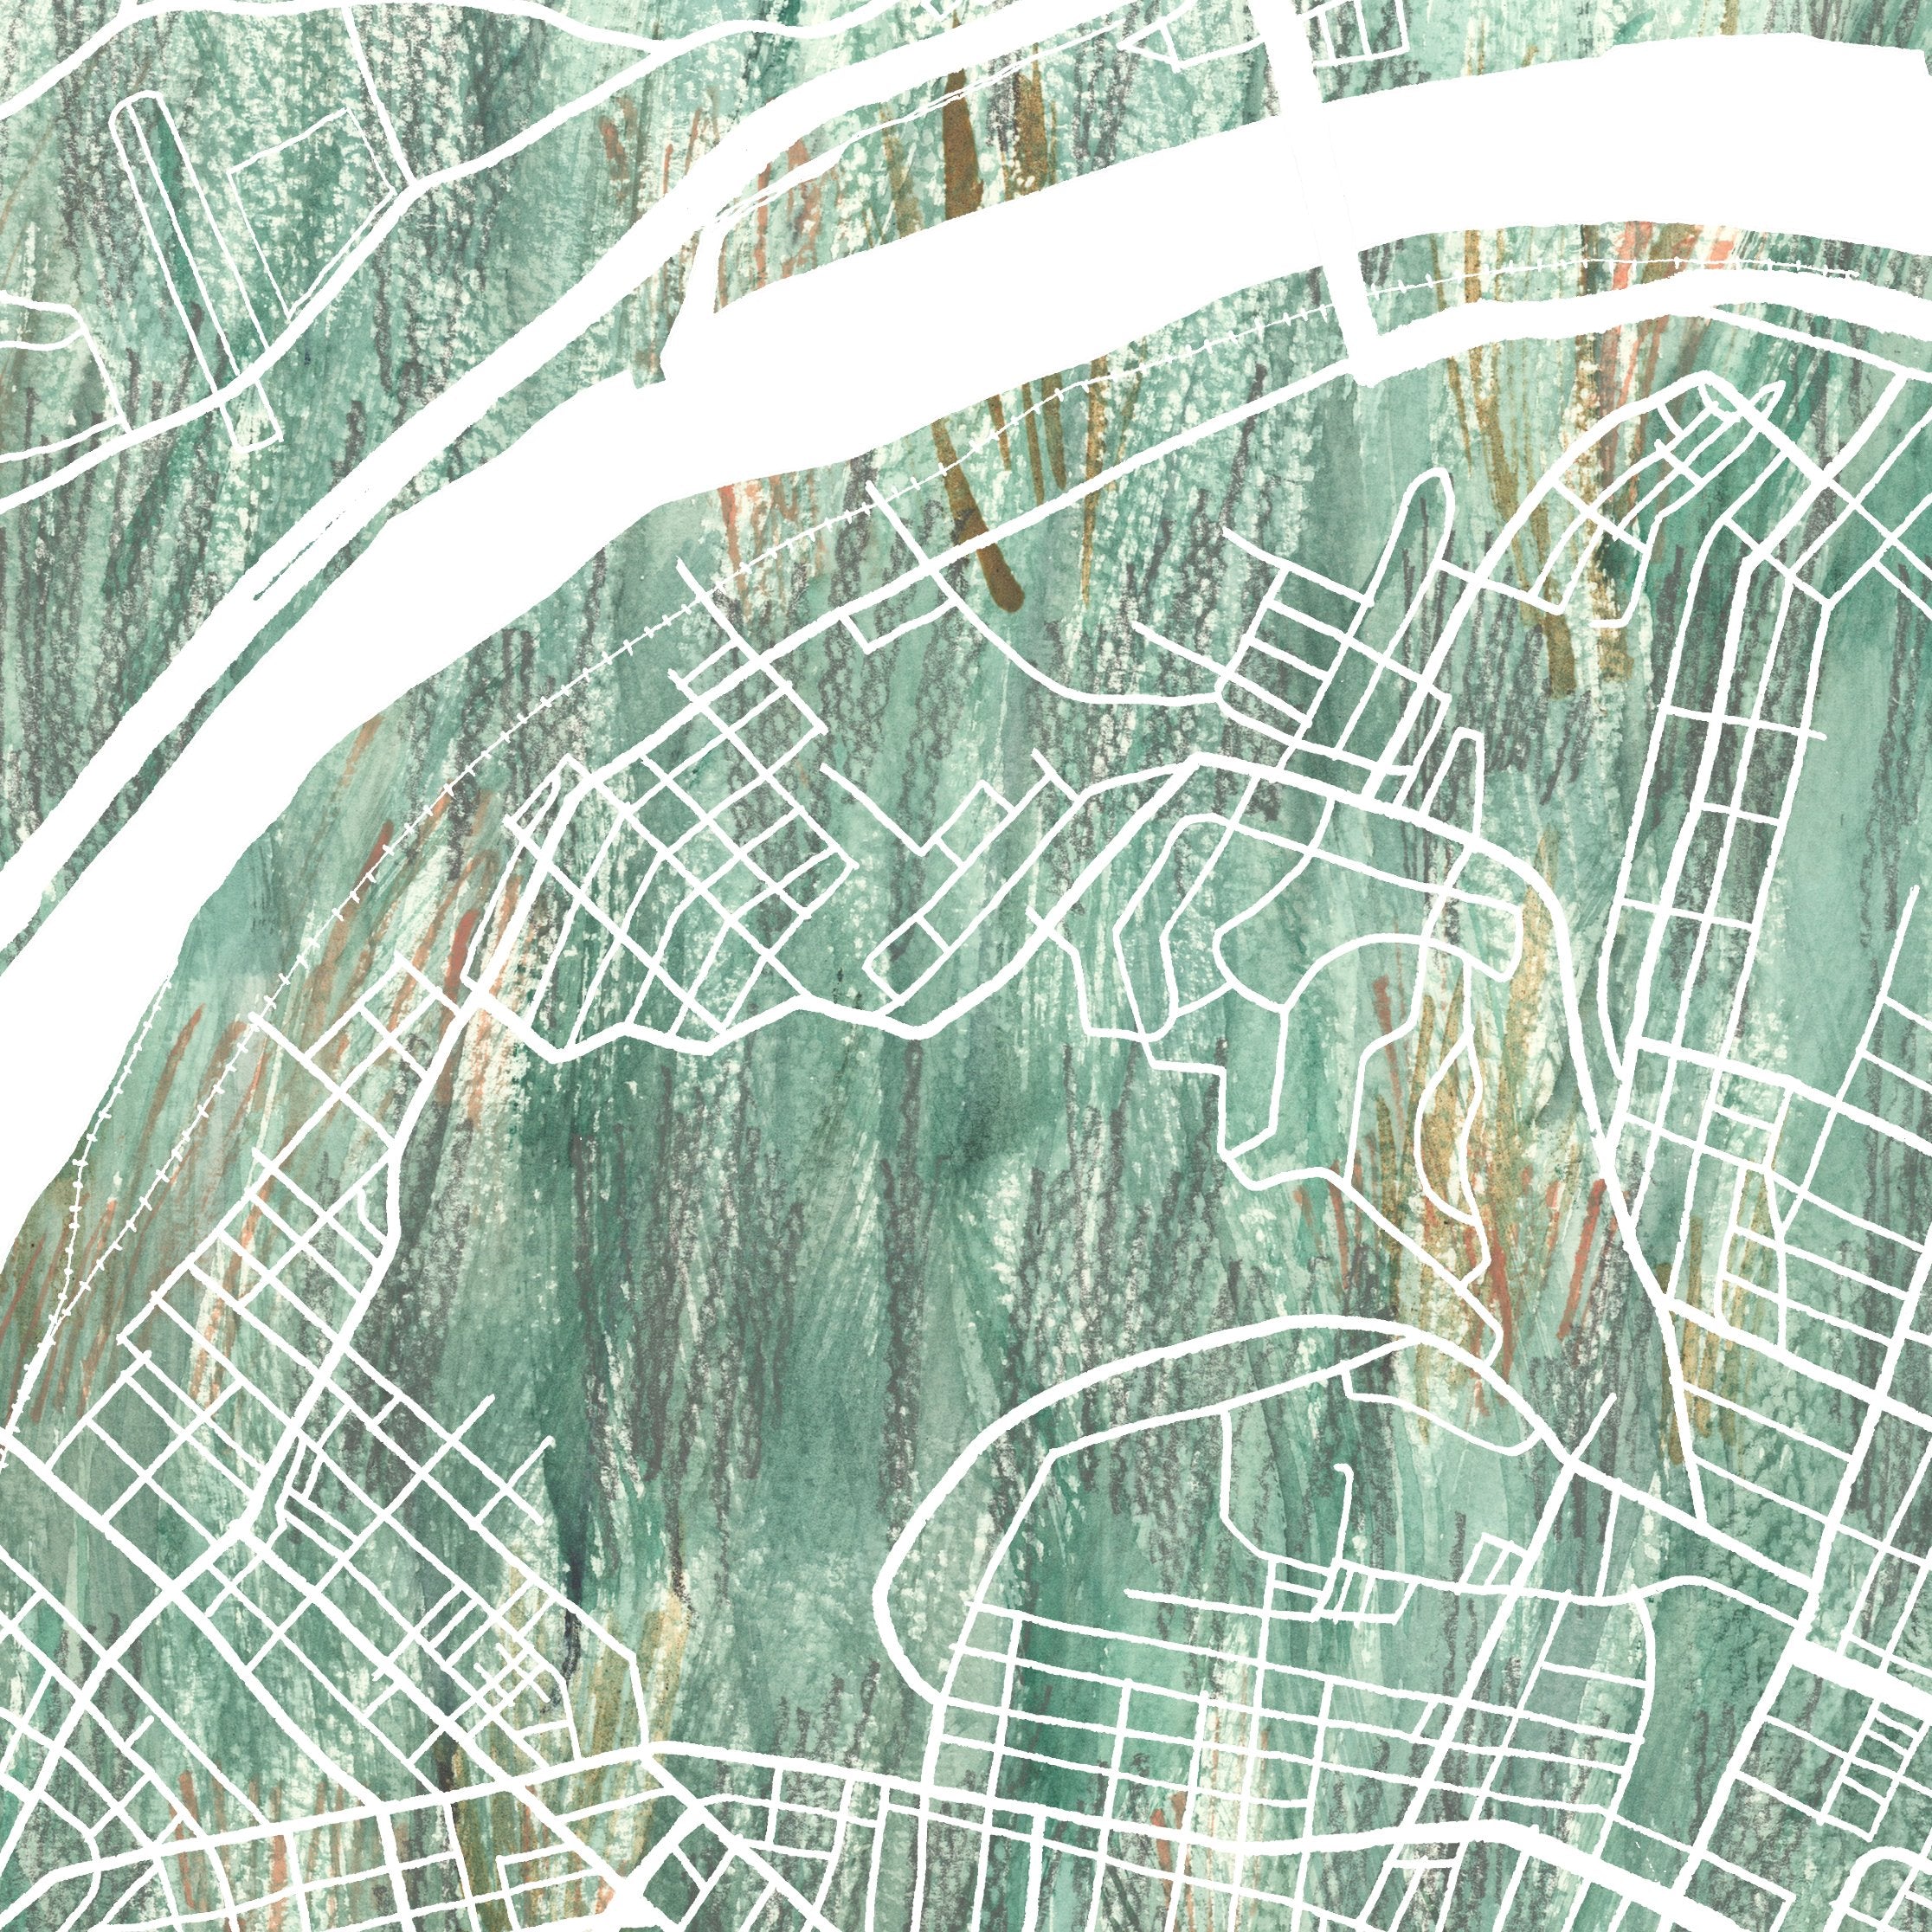 PITTSBURGH Urban Fabrics City Map: PRINT